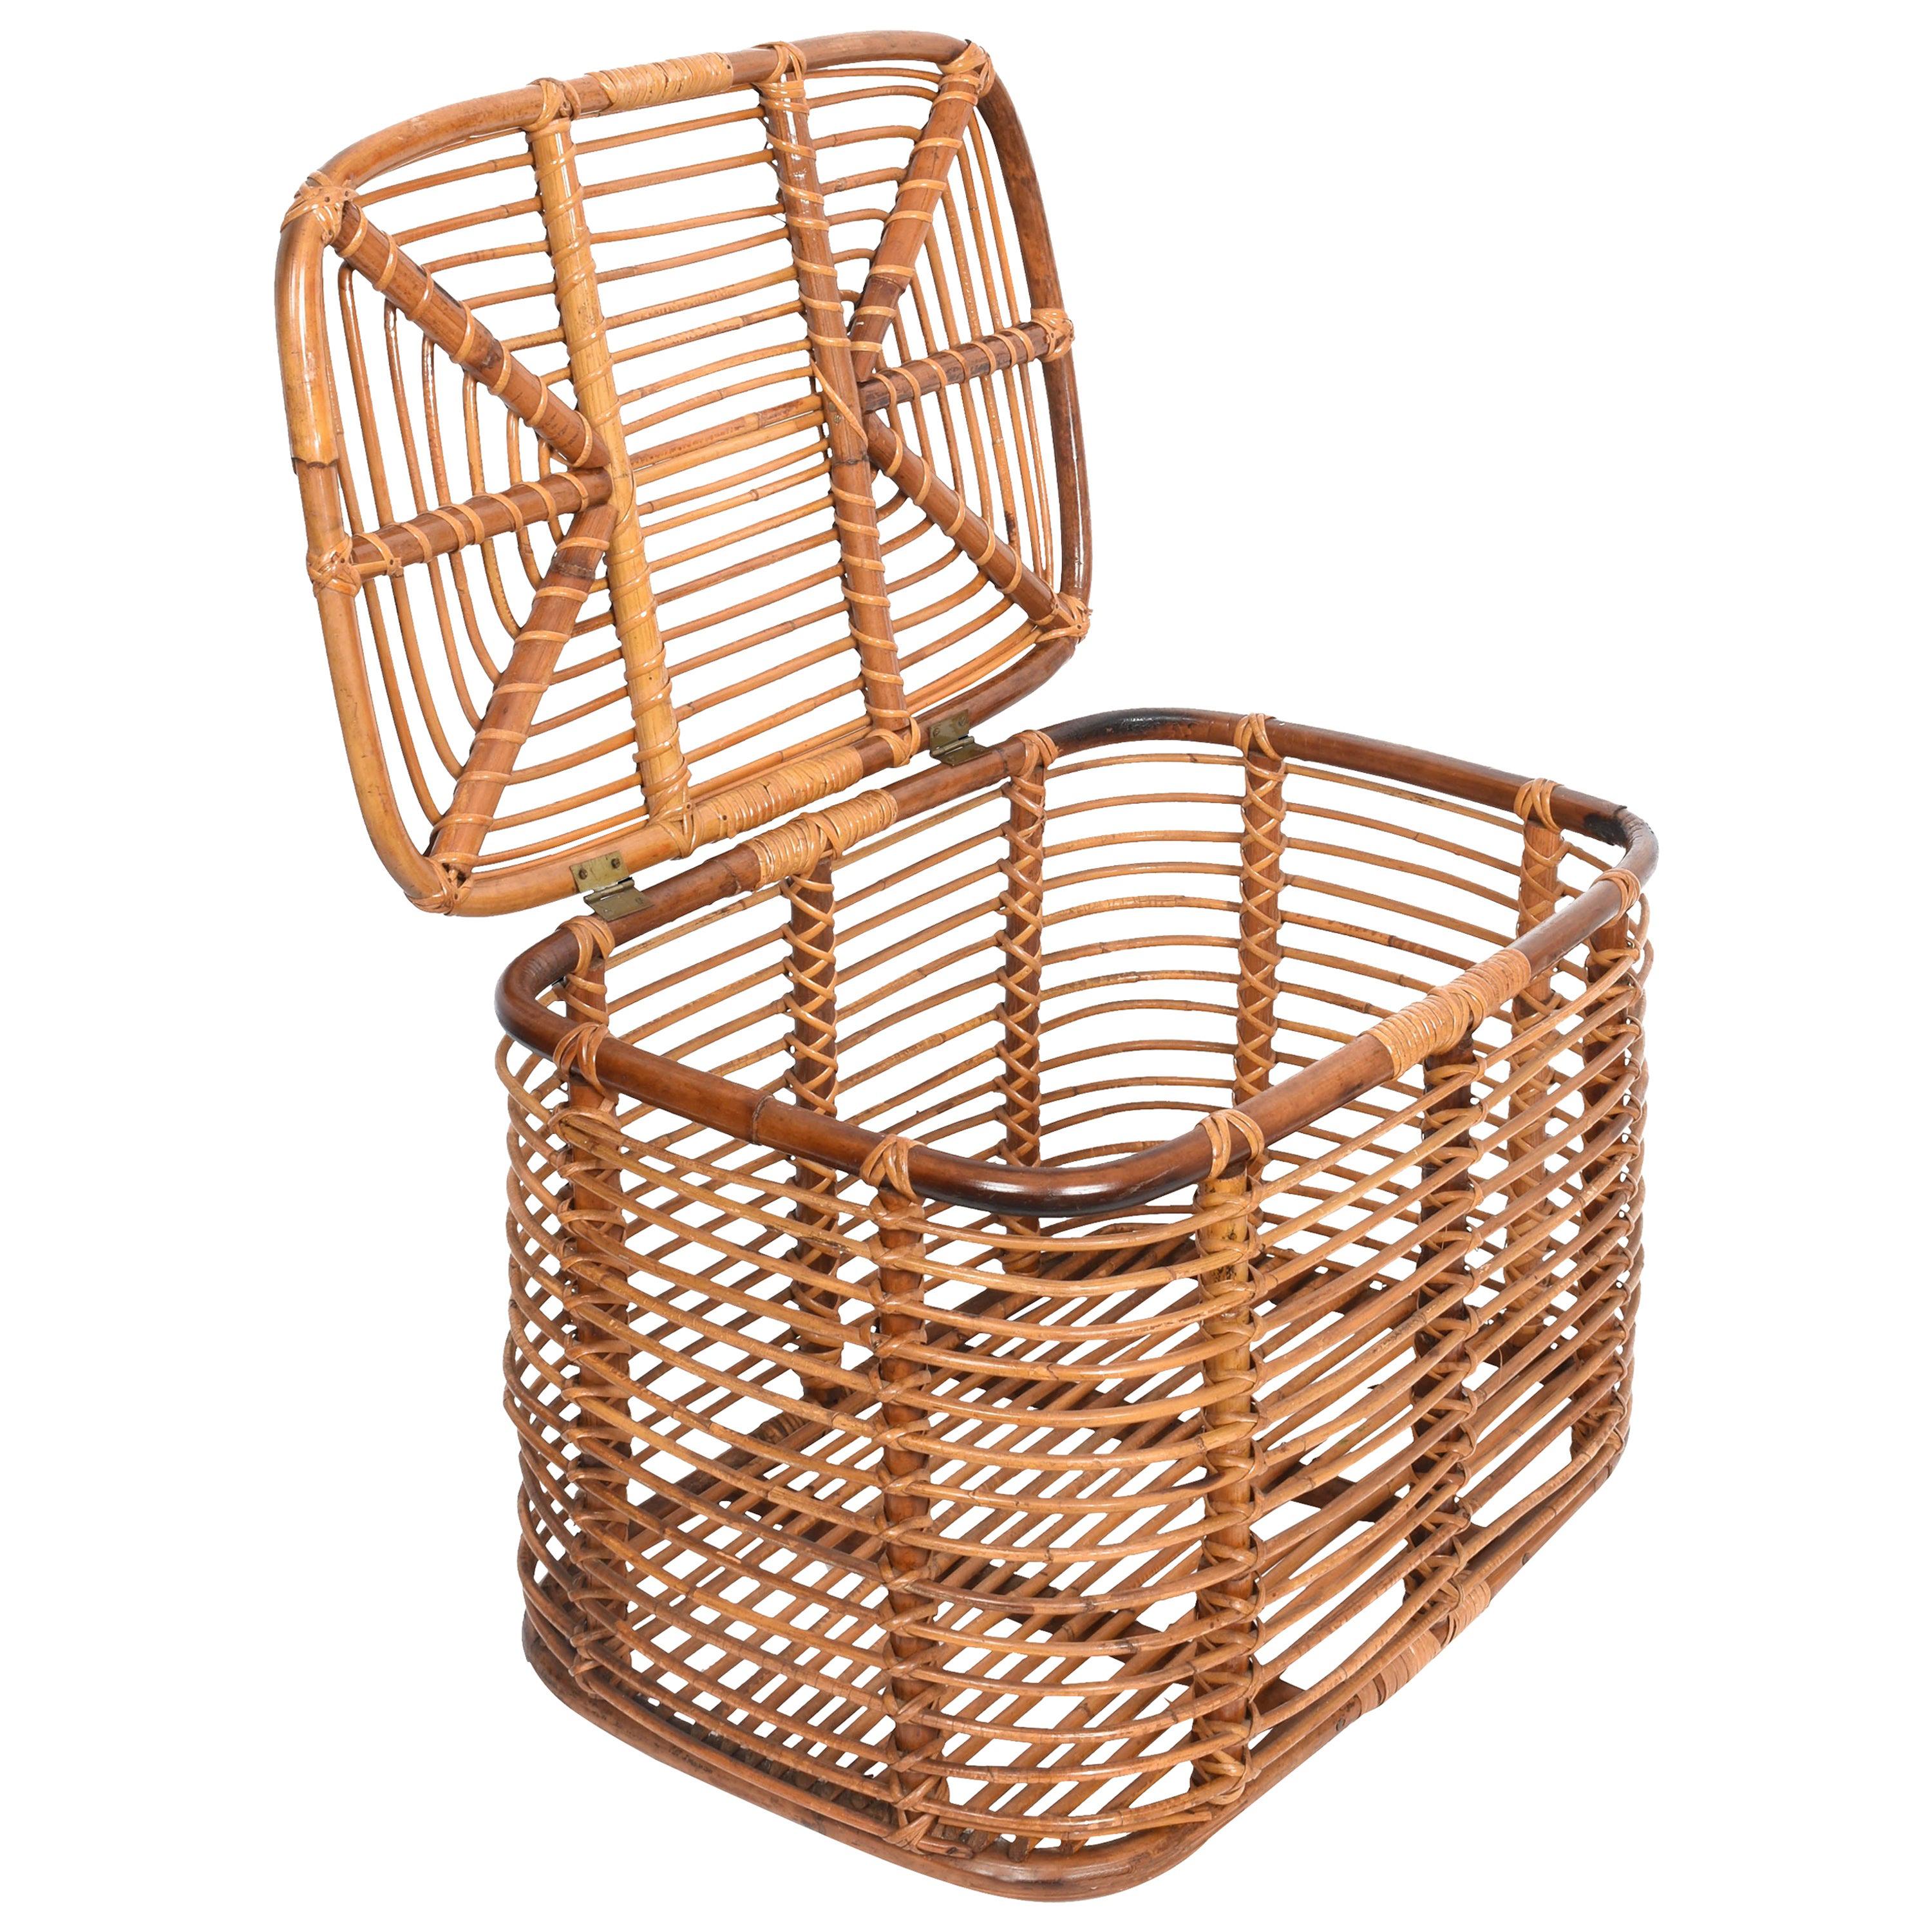 Rattan Style Basket  Storage basket  mid century modern  MCM style  basket decor